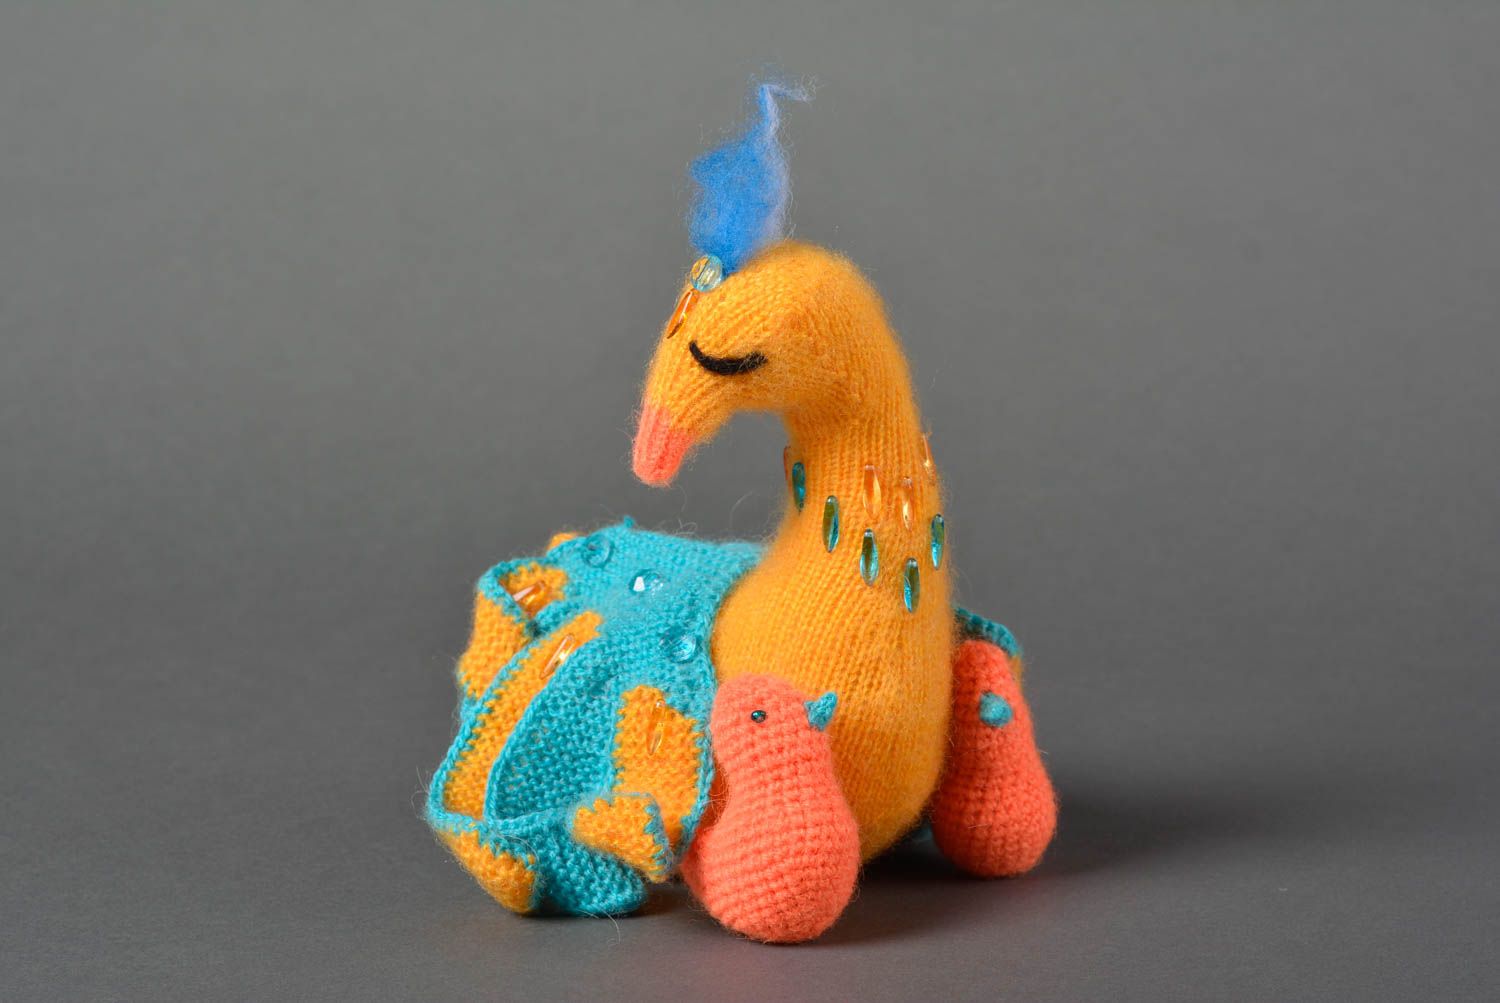 Handmade toy animal toy designer toy unusual gift nursery decor gift for baby photo 1